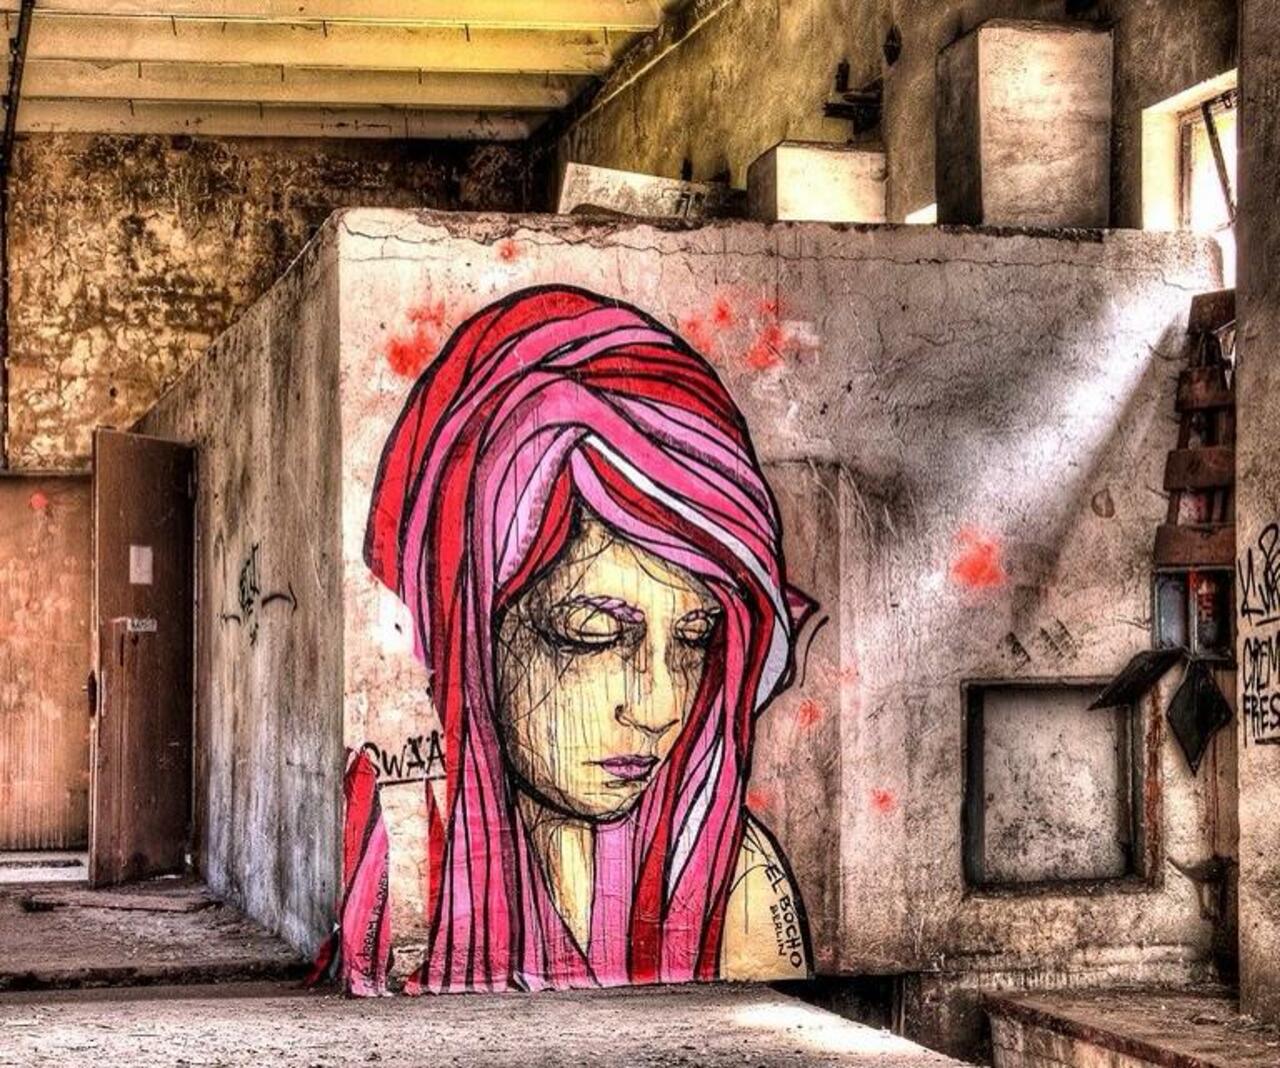 Street Art by El Bocho 

#art #arte #graffiti  #streetart http://t.co/gRJUJtADfb